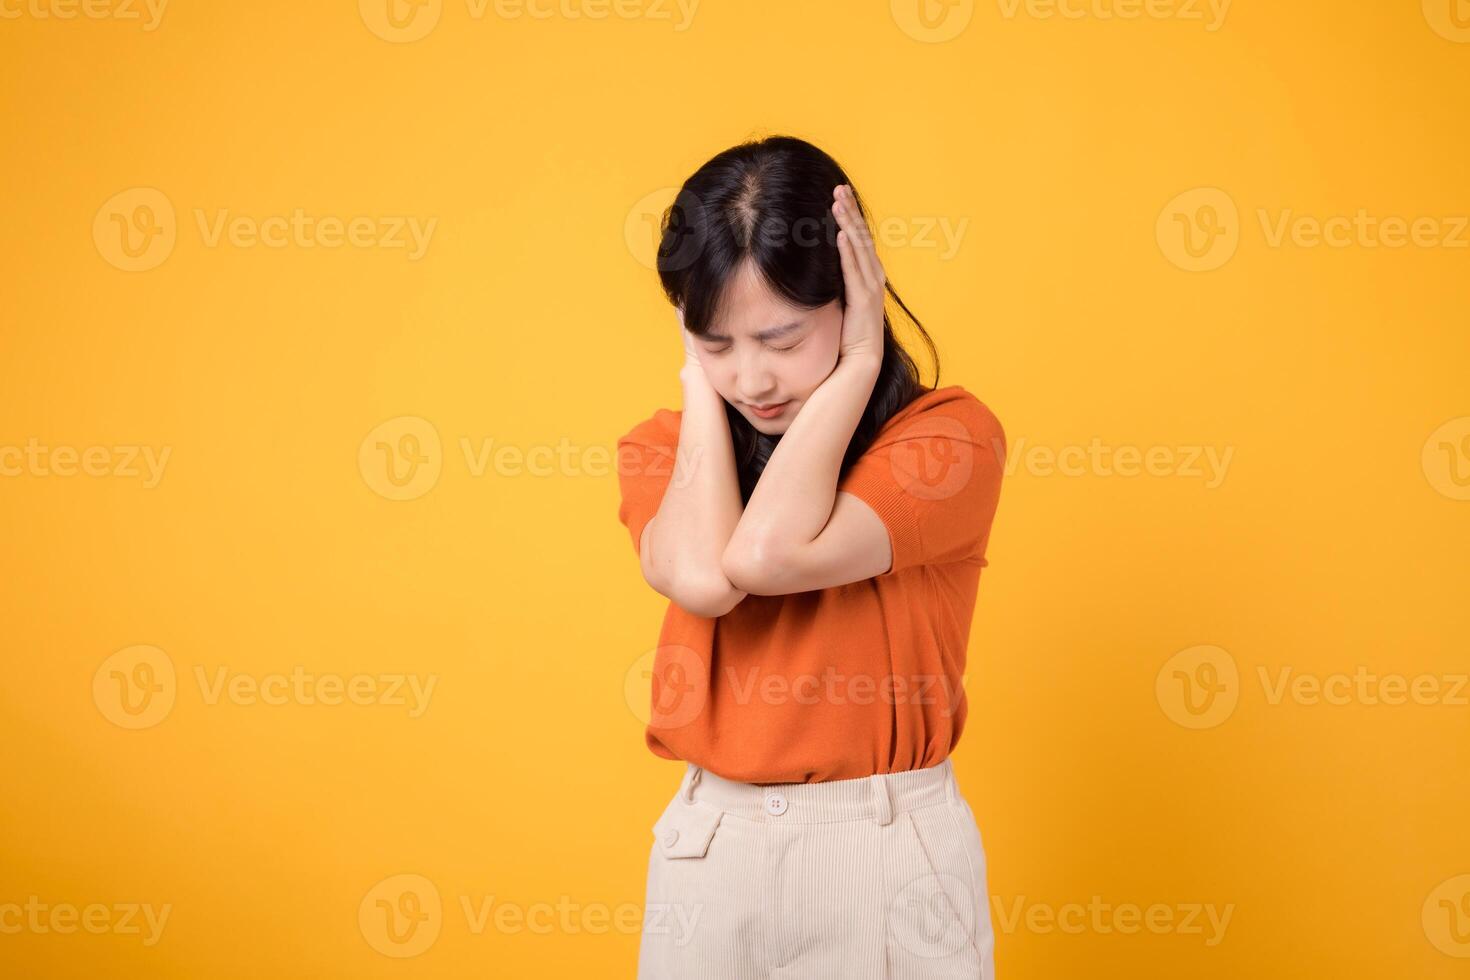 retrato joven 30s asiático mujer expresión desesperado emocional estrés sensación con cerrado oído con mano para silencio a oír un ruido sonido en contra amarillo antecedentes. infeliz desesperado gesto concepto. foto